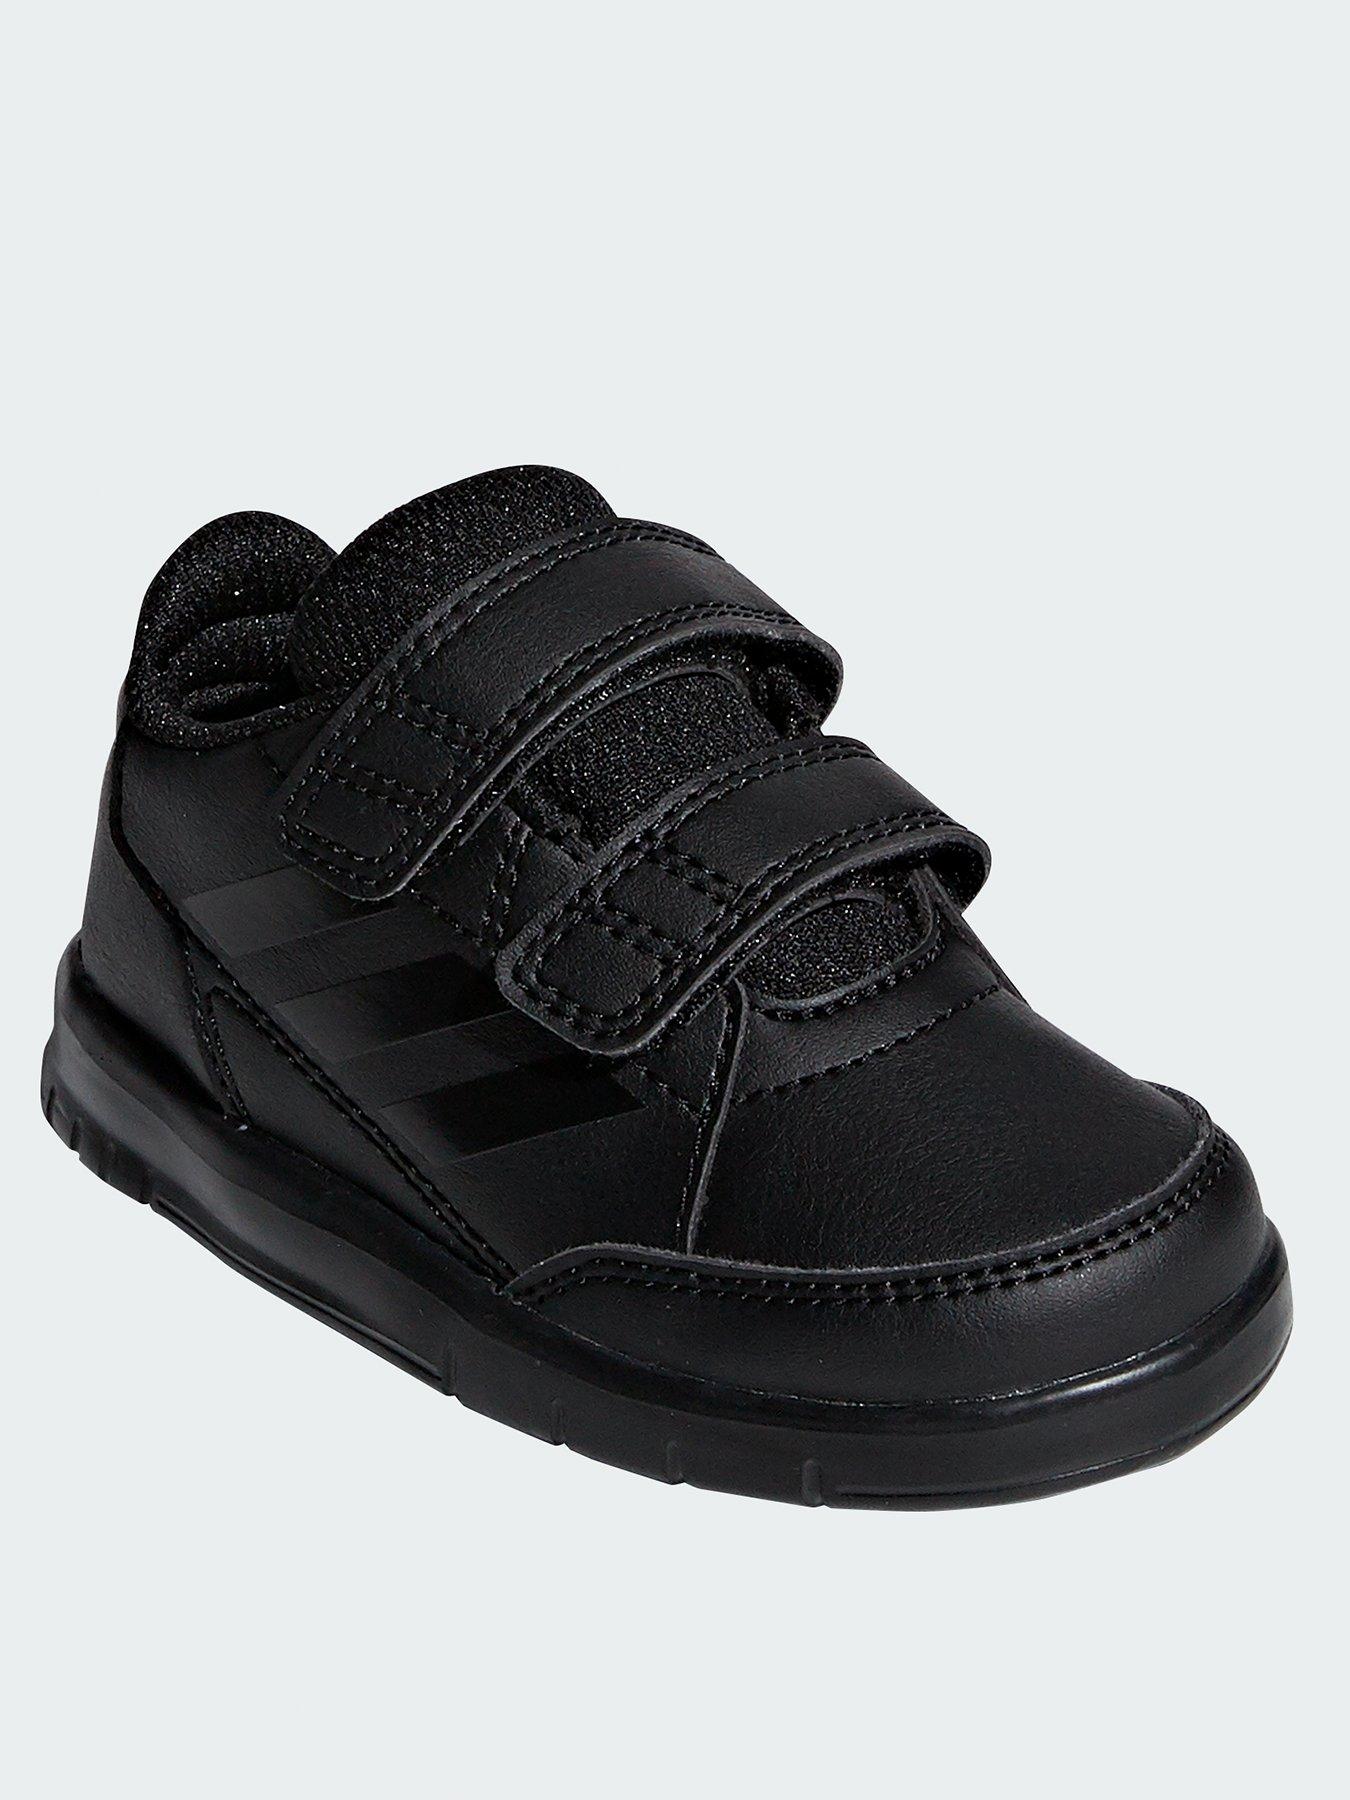 adidas school trainers black